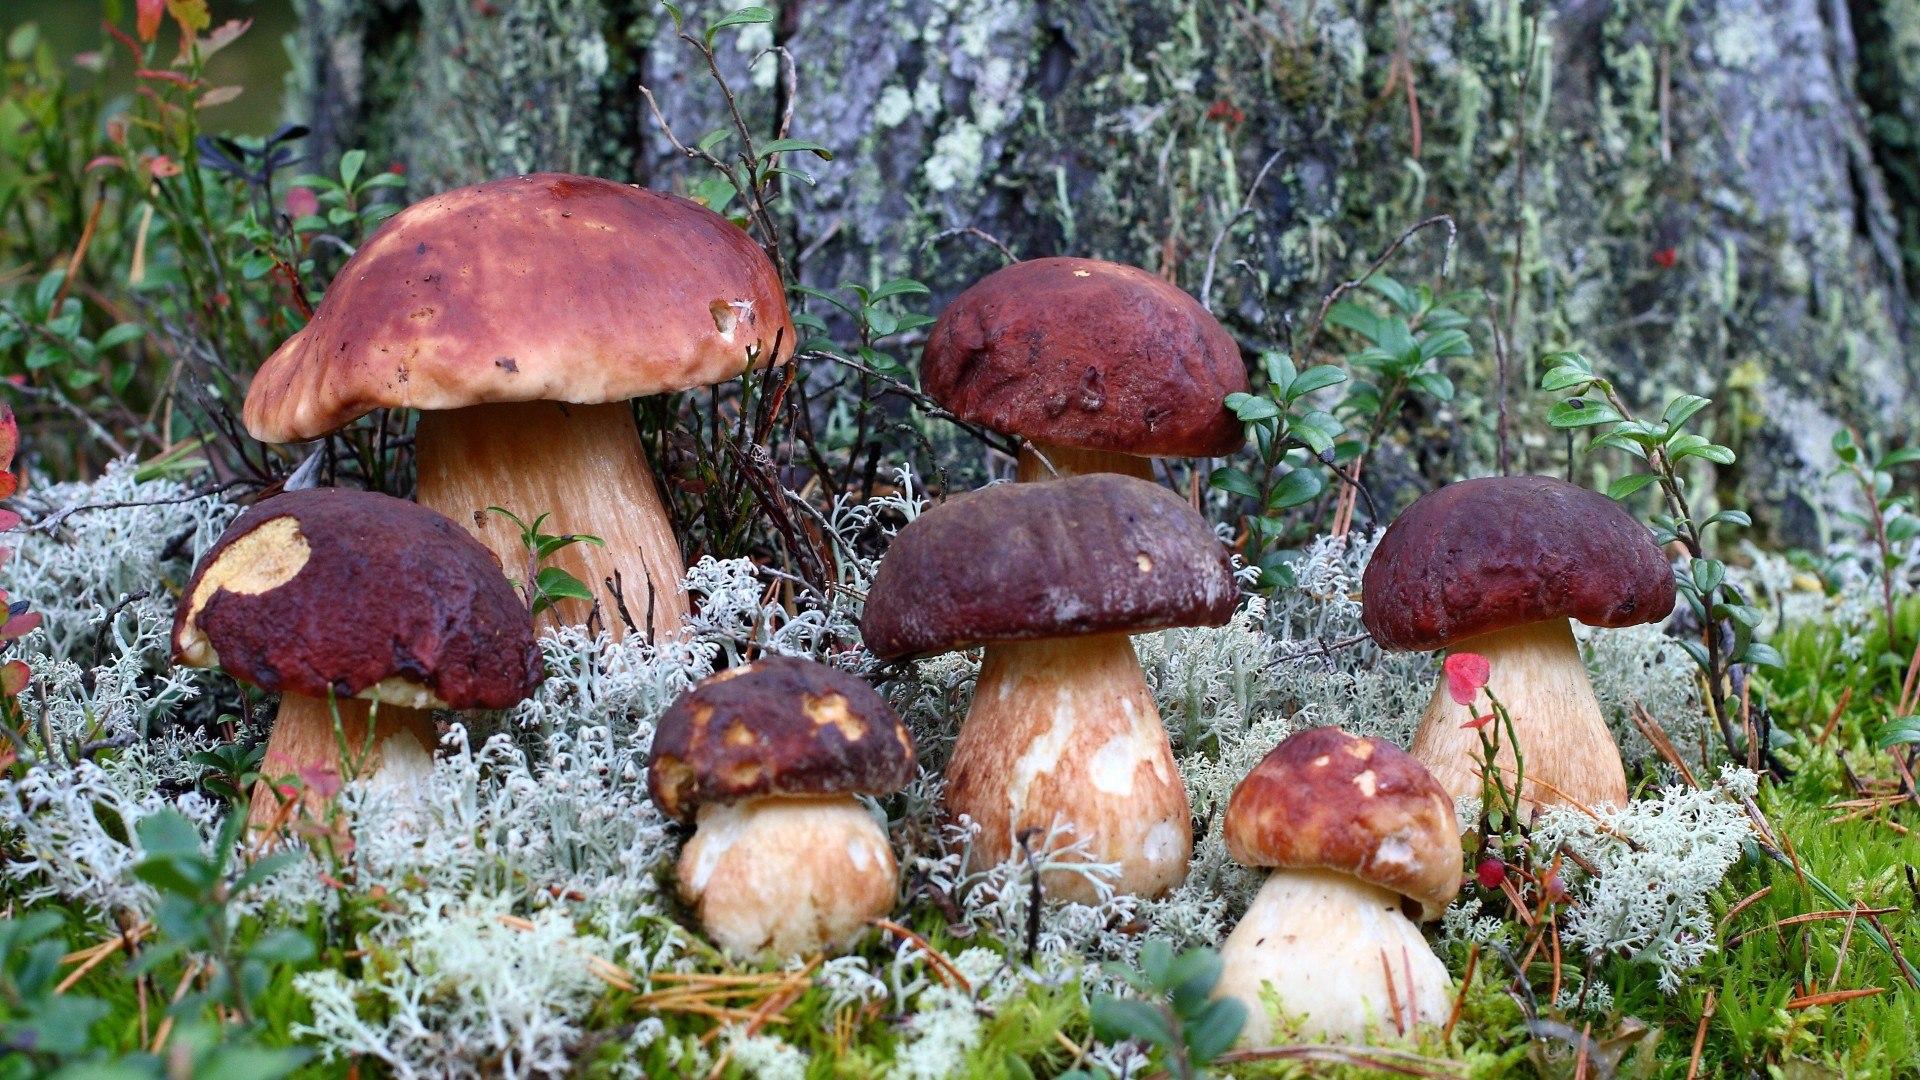 Family porcini mushrooms wallpaper and image